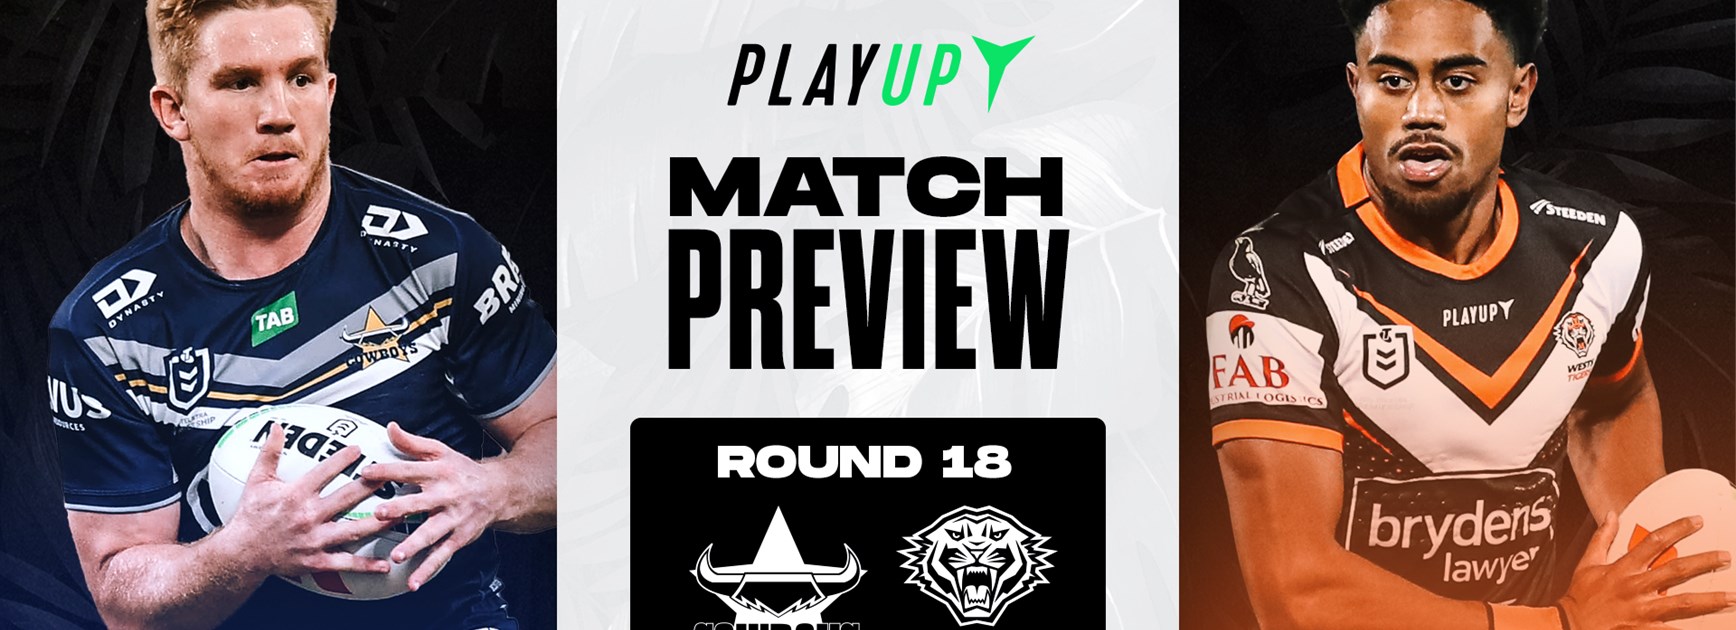 Match Preview: Round 18 vs Cowboys